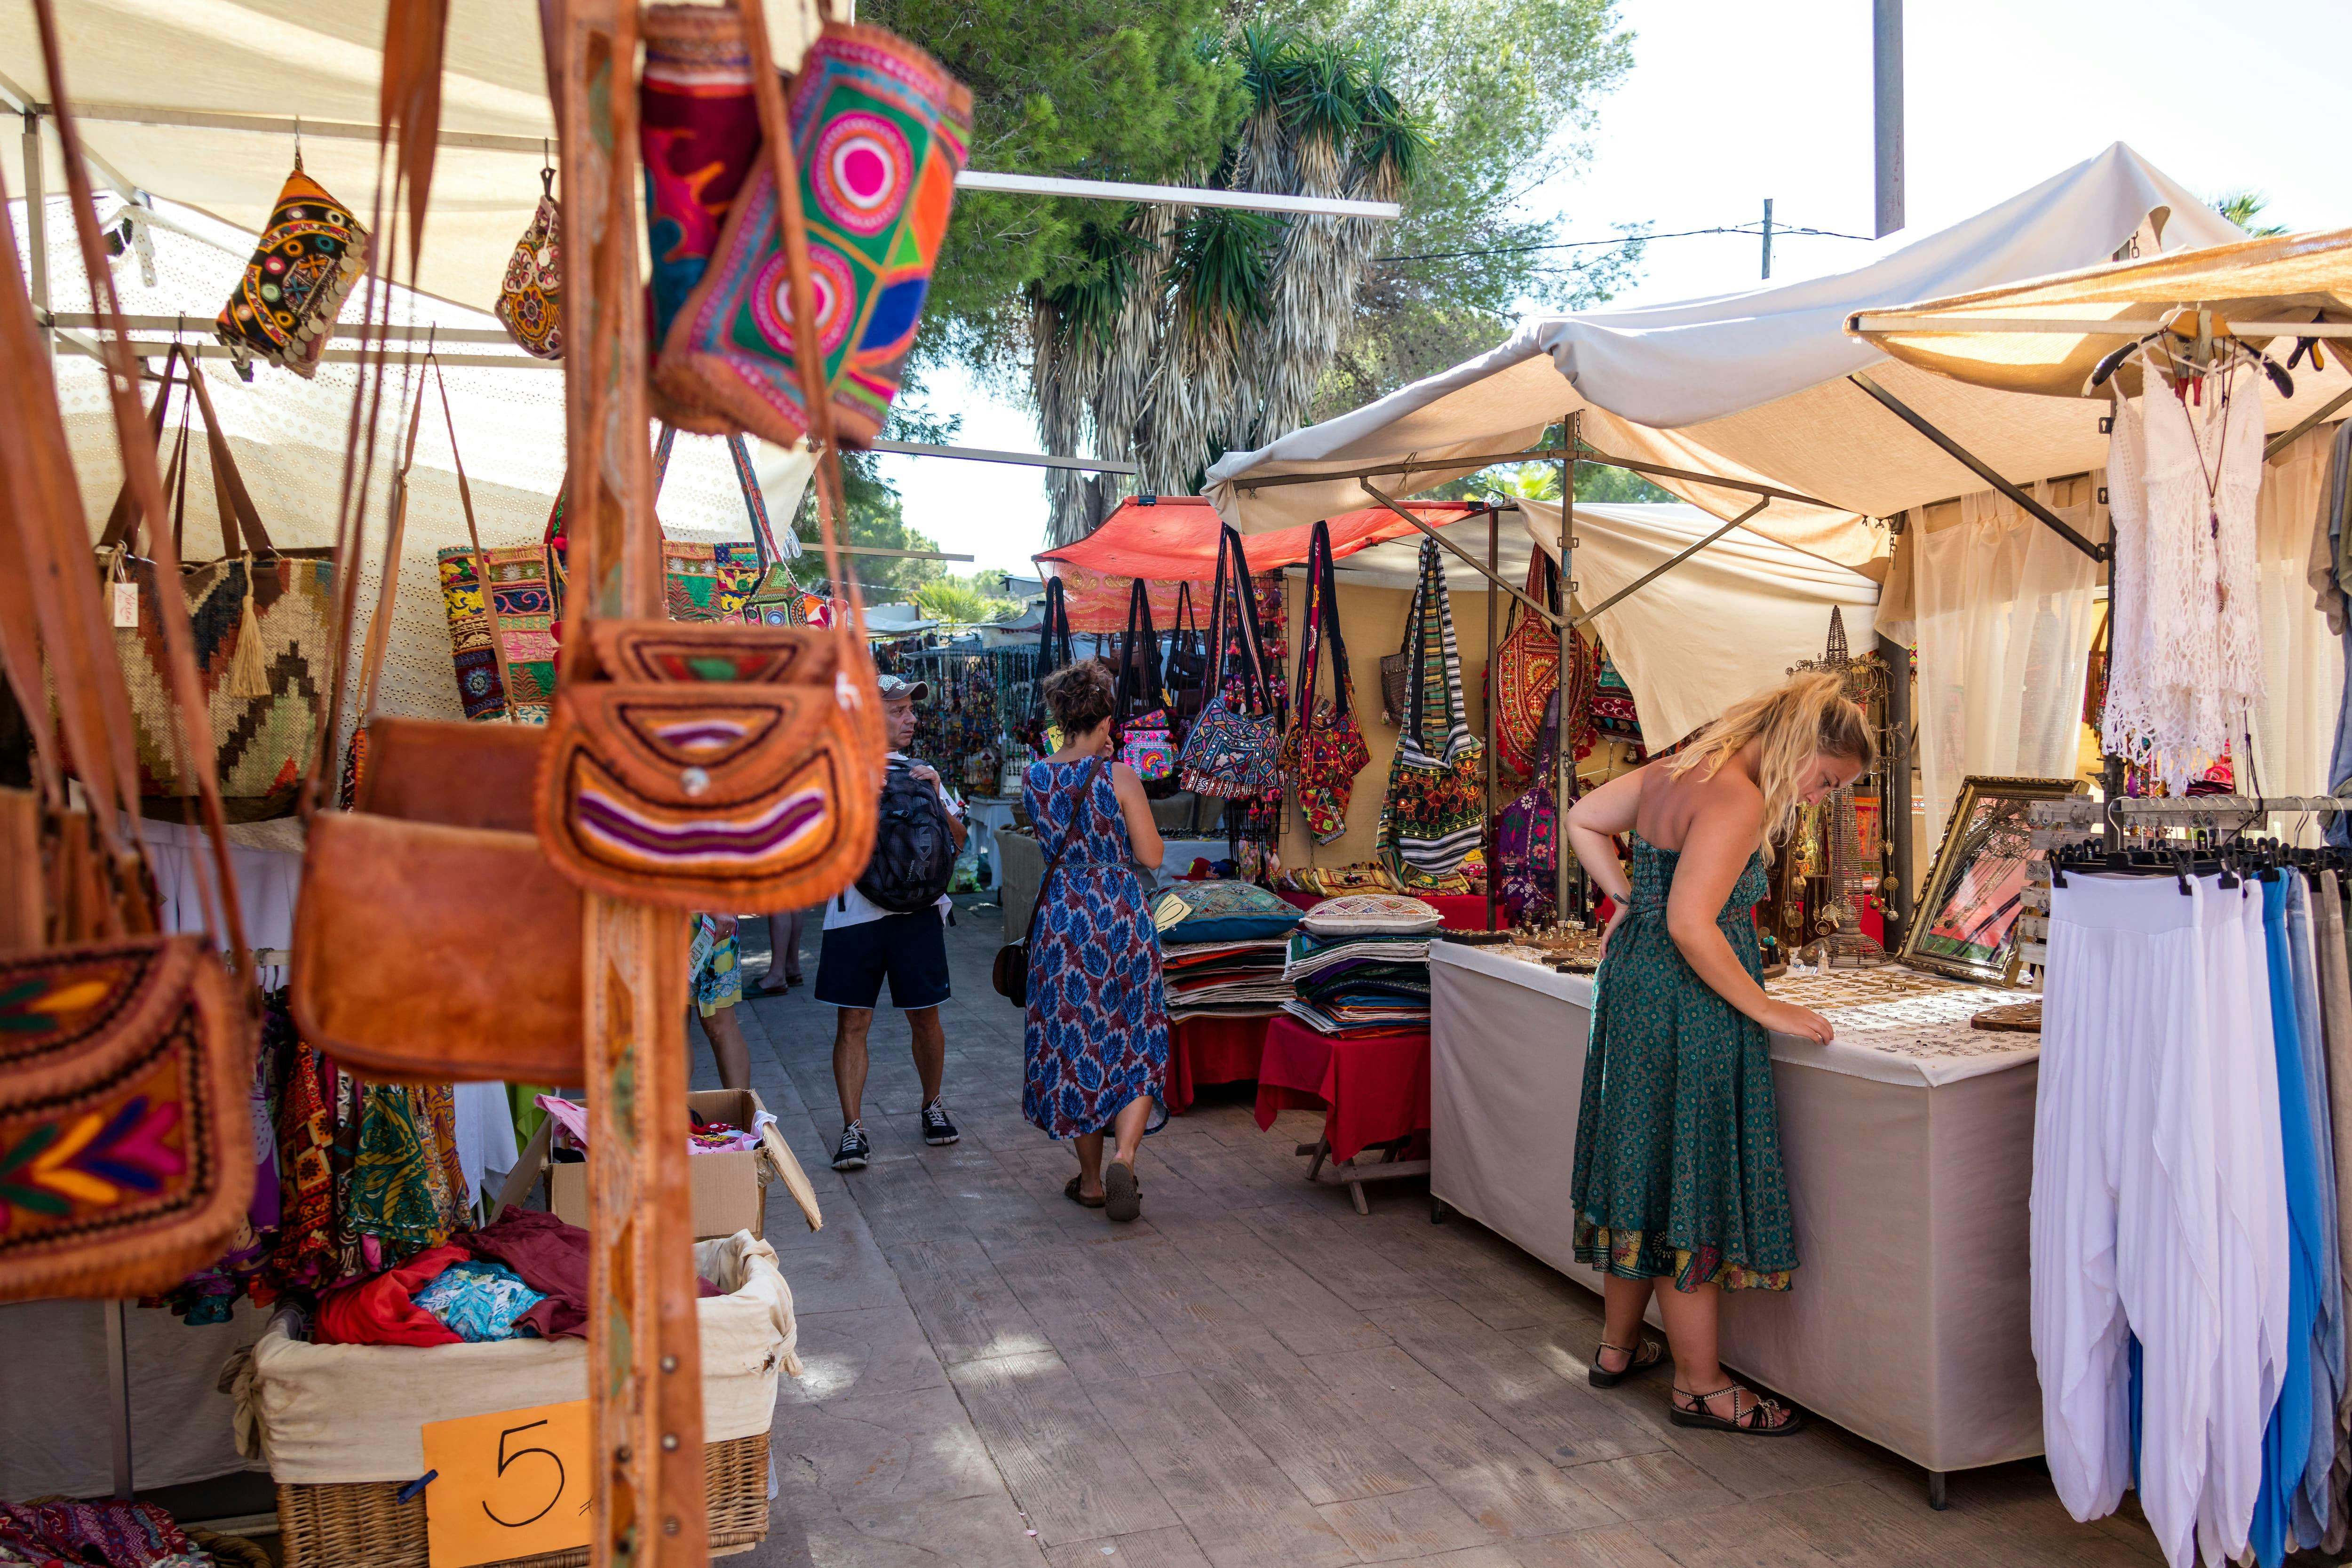 Visita al mercado hippy de Ibiza con un guía local